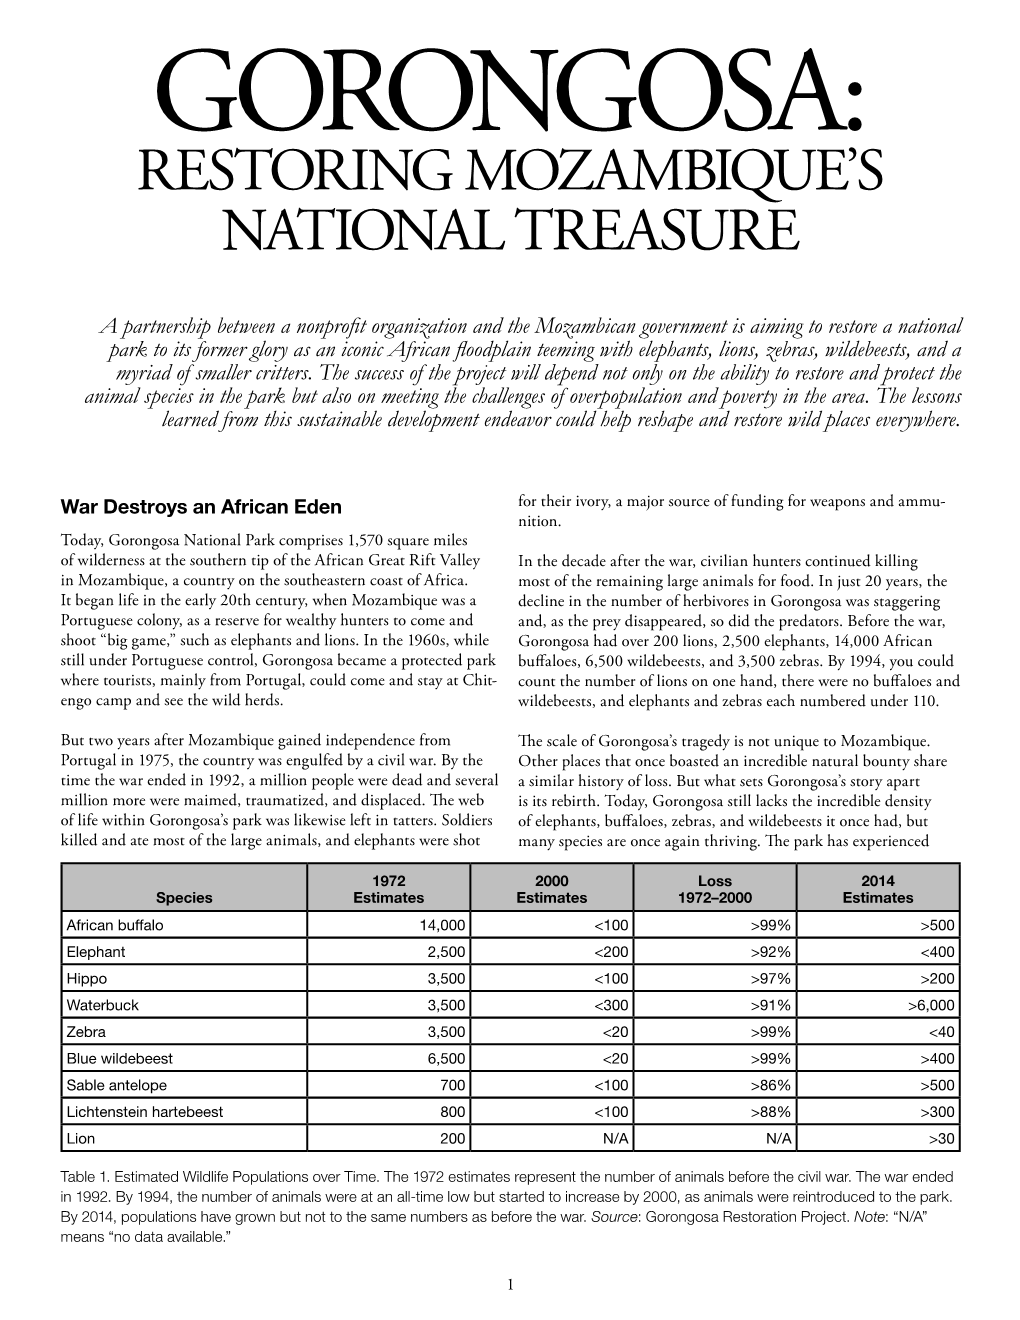 Restoring Mozambique's National Treasure (PDF)